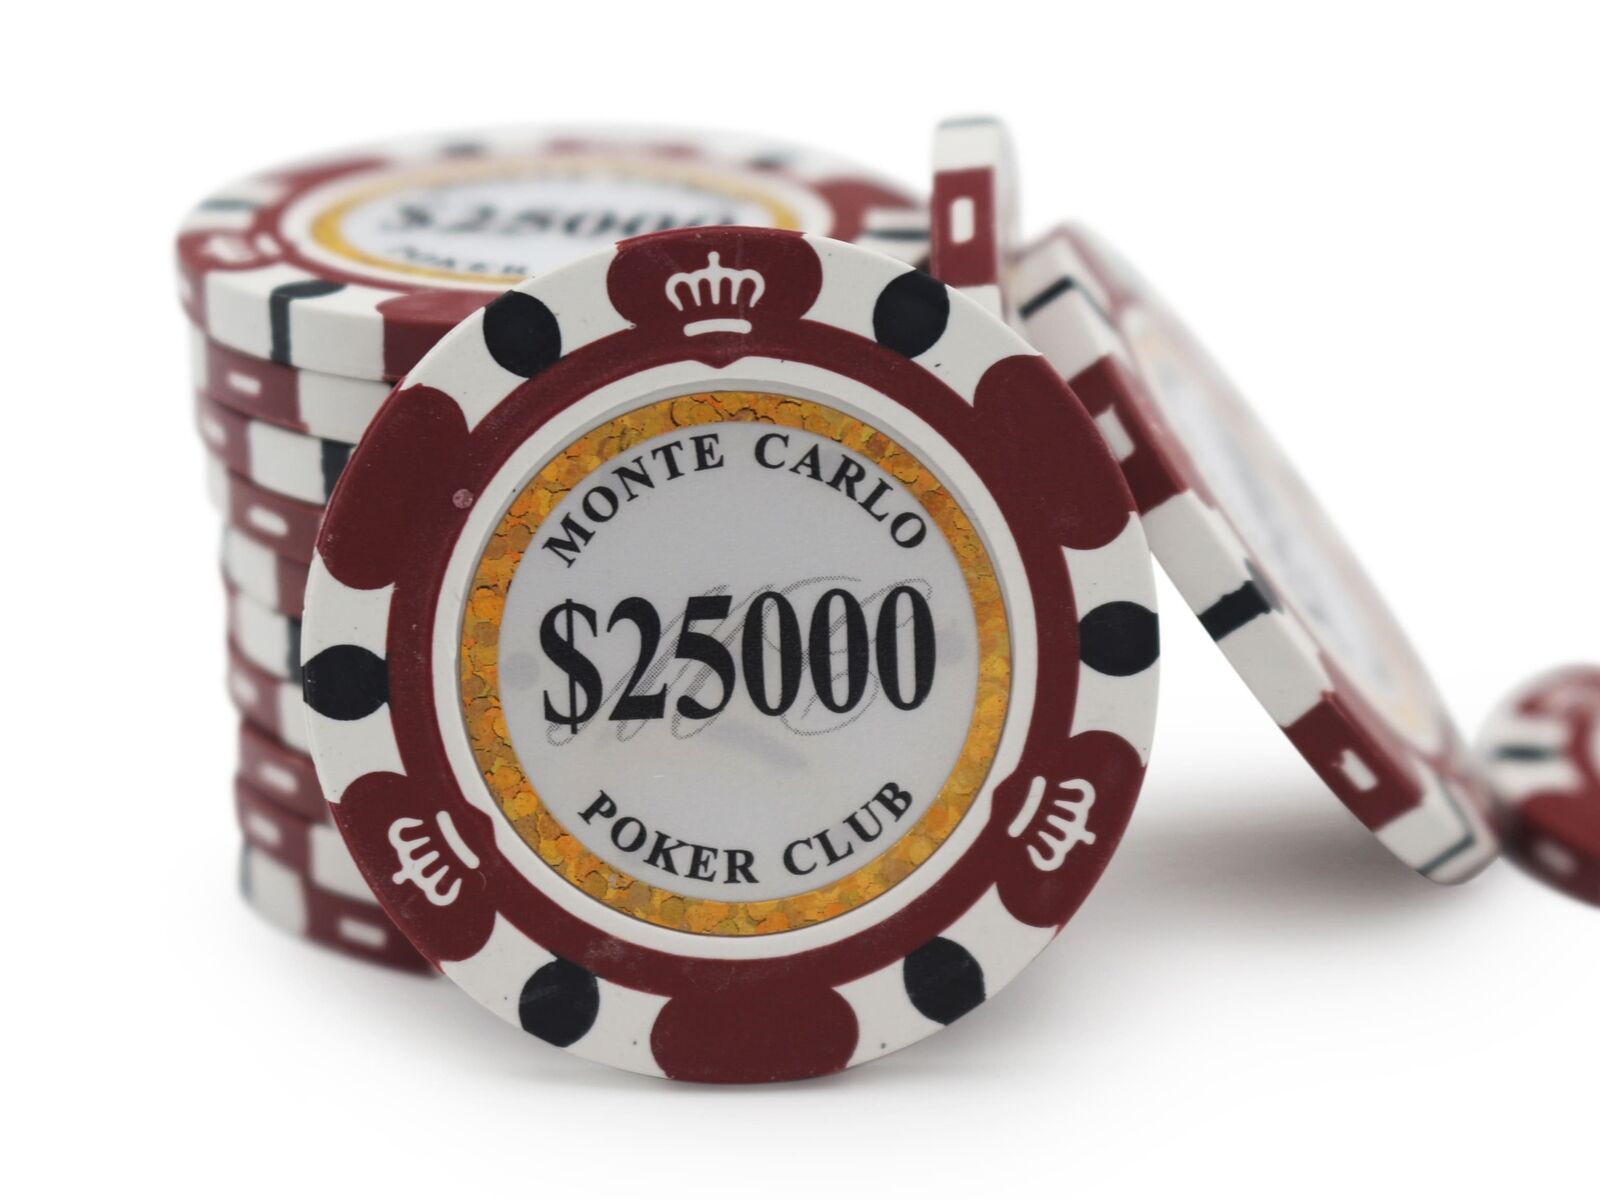 25 Monte Carlo Poker Club 14g Premium Clay Poker Chips - $25,000 Denomination